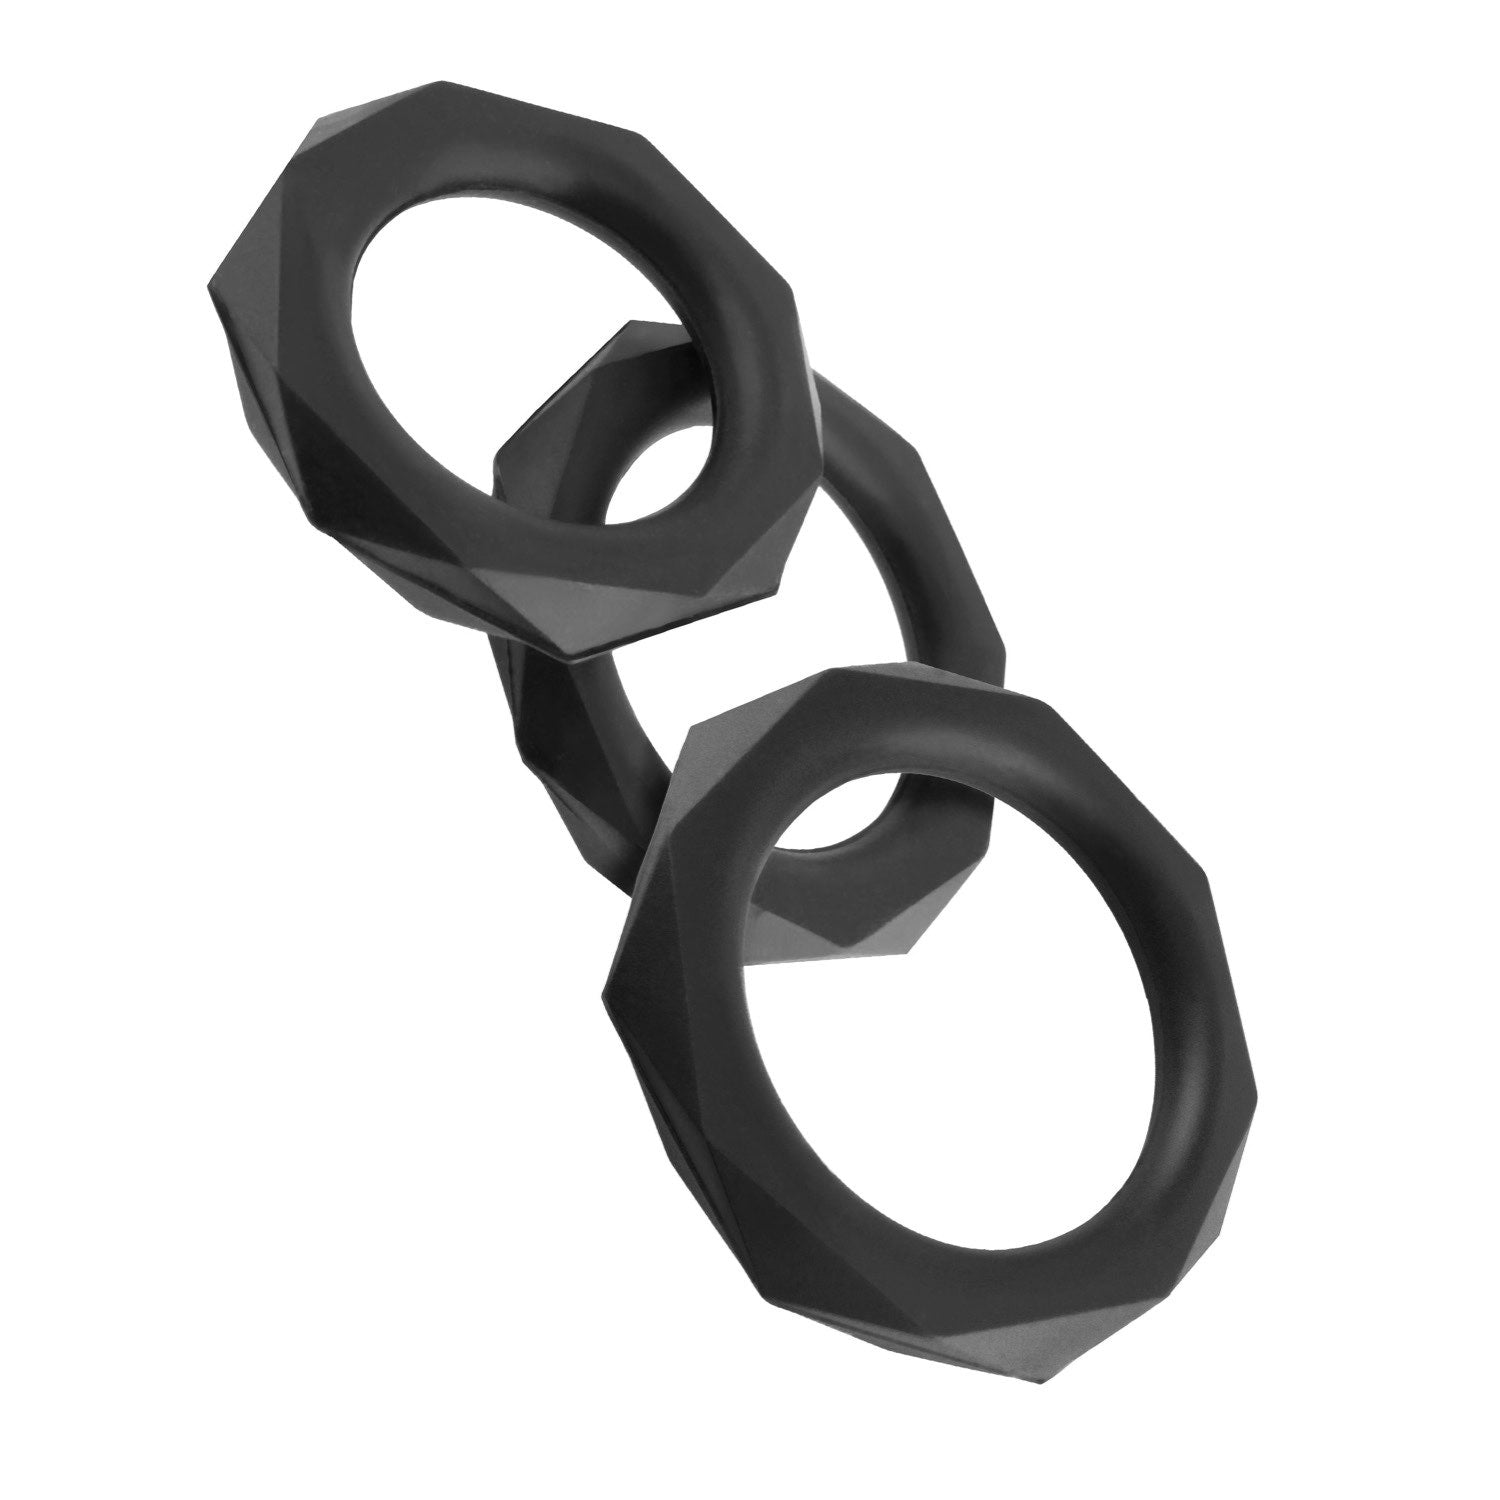 Fantasy C-Ringz Silicone Designer Stamina Set - Black Cock Rings - Set of 3 Sizes by Pipedream